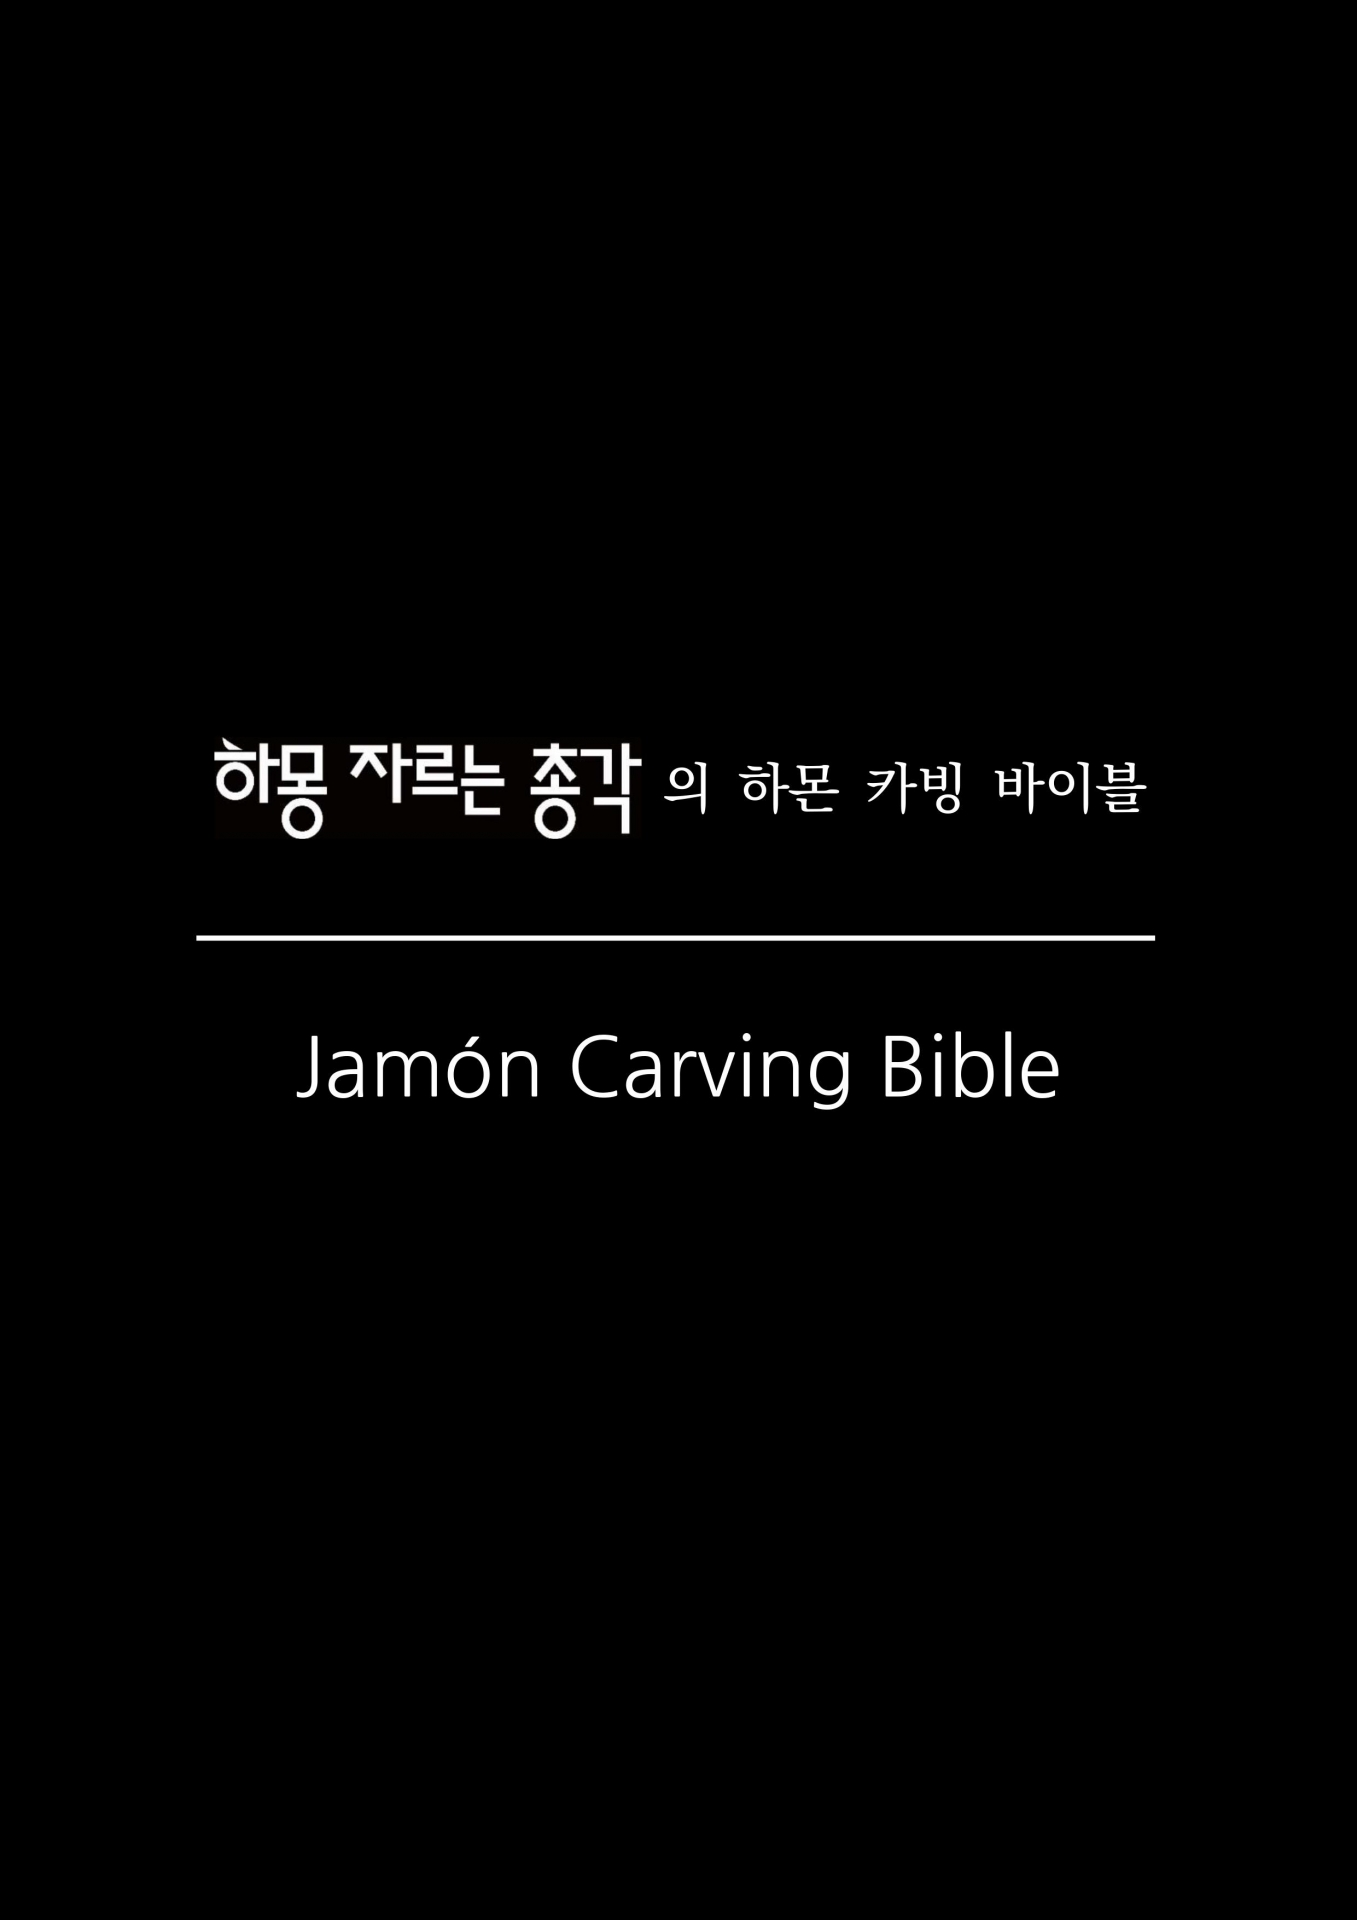 Jamon_carving_bible_cover_verti-1 (1).jpg